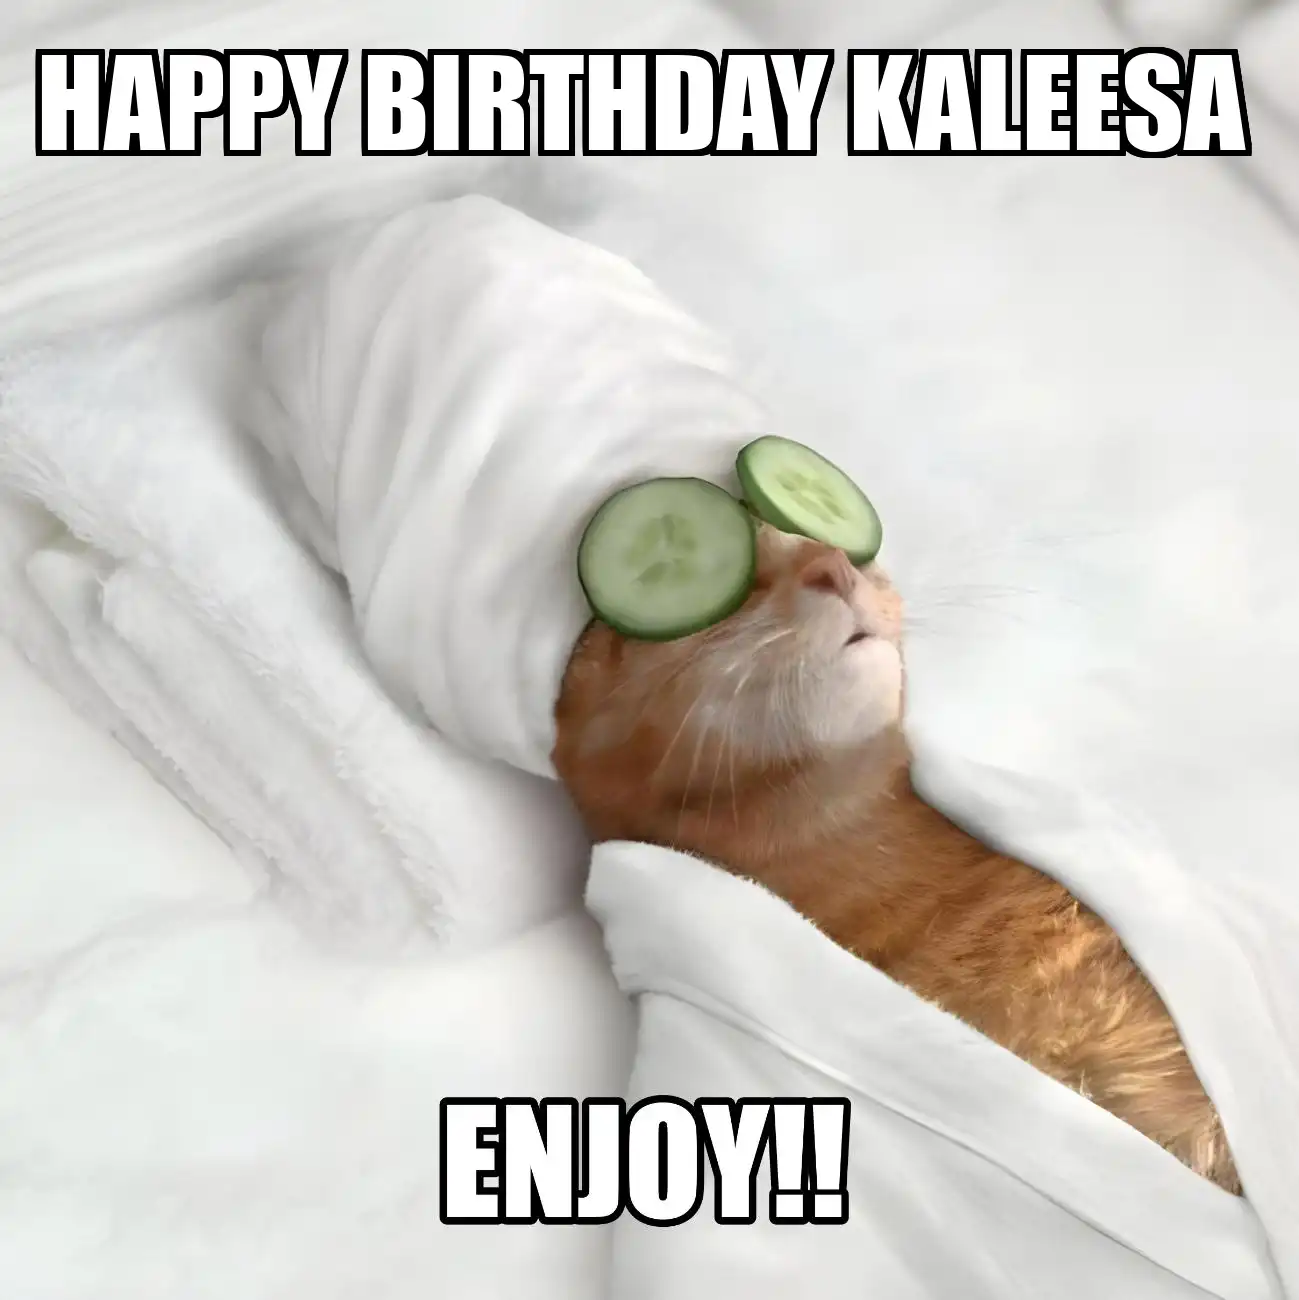 Happy Birthday Kaleesa Enjoy Cat Meme